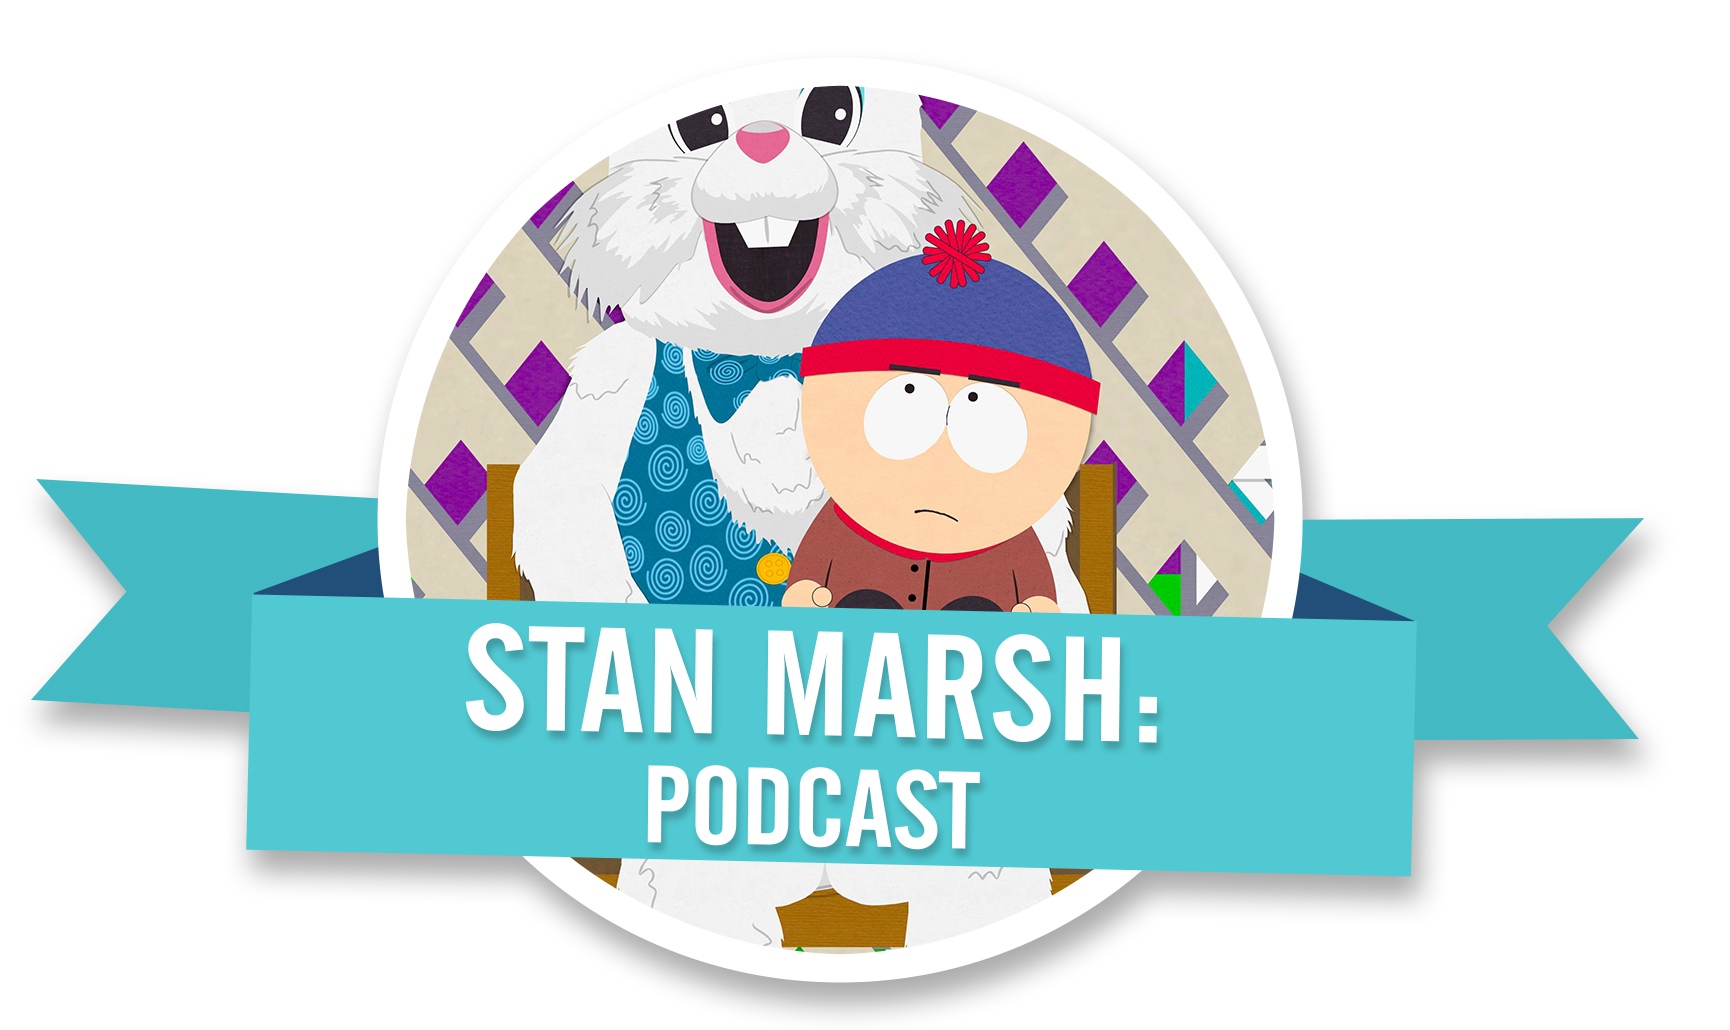 Marsh Broflovski Cartman & McCormick: If South Park Were an Ad Agency